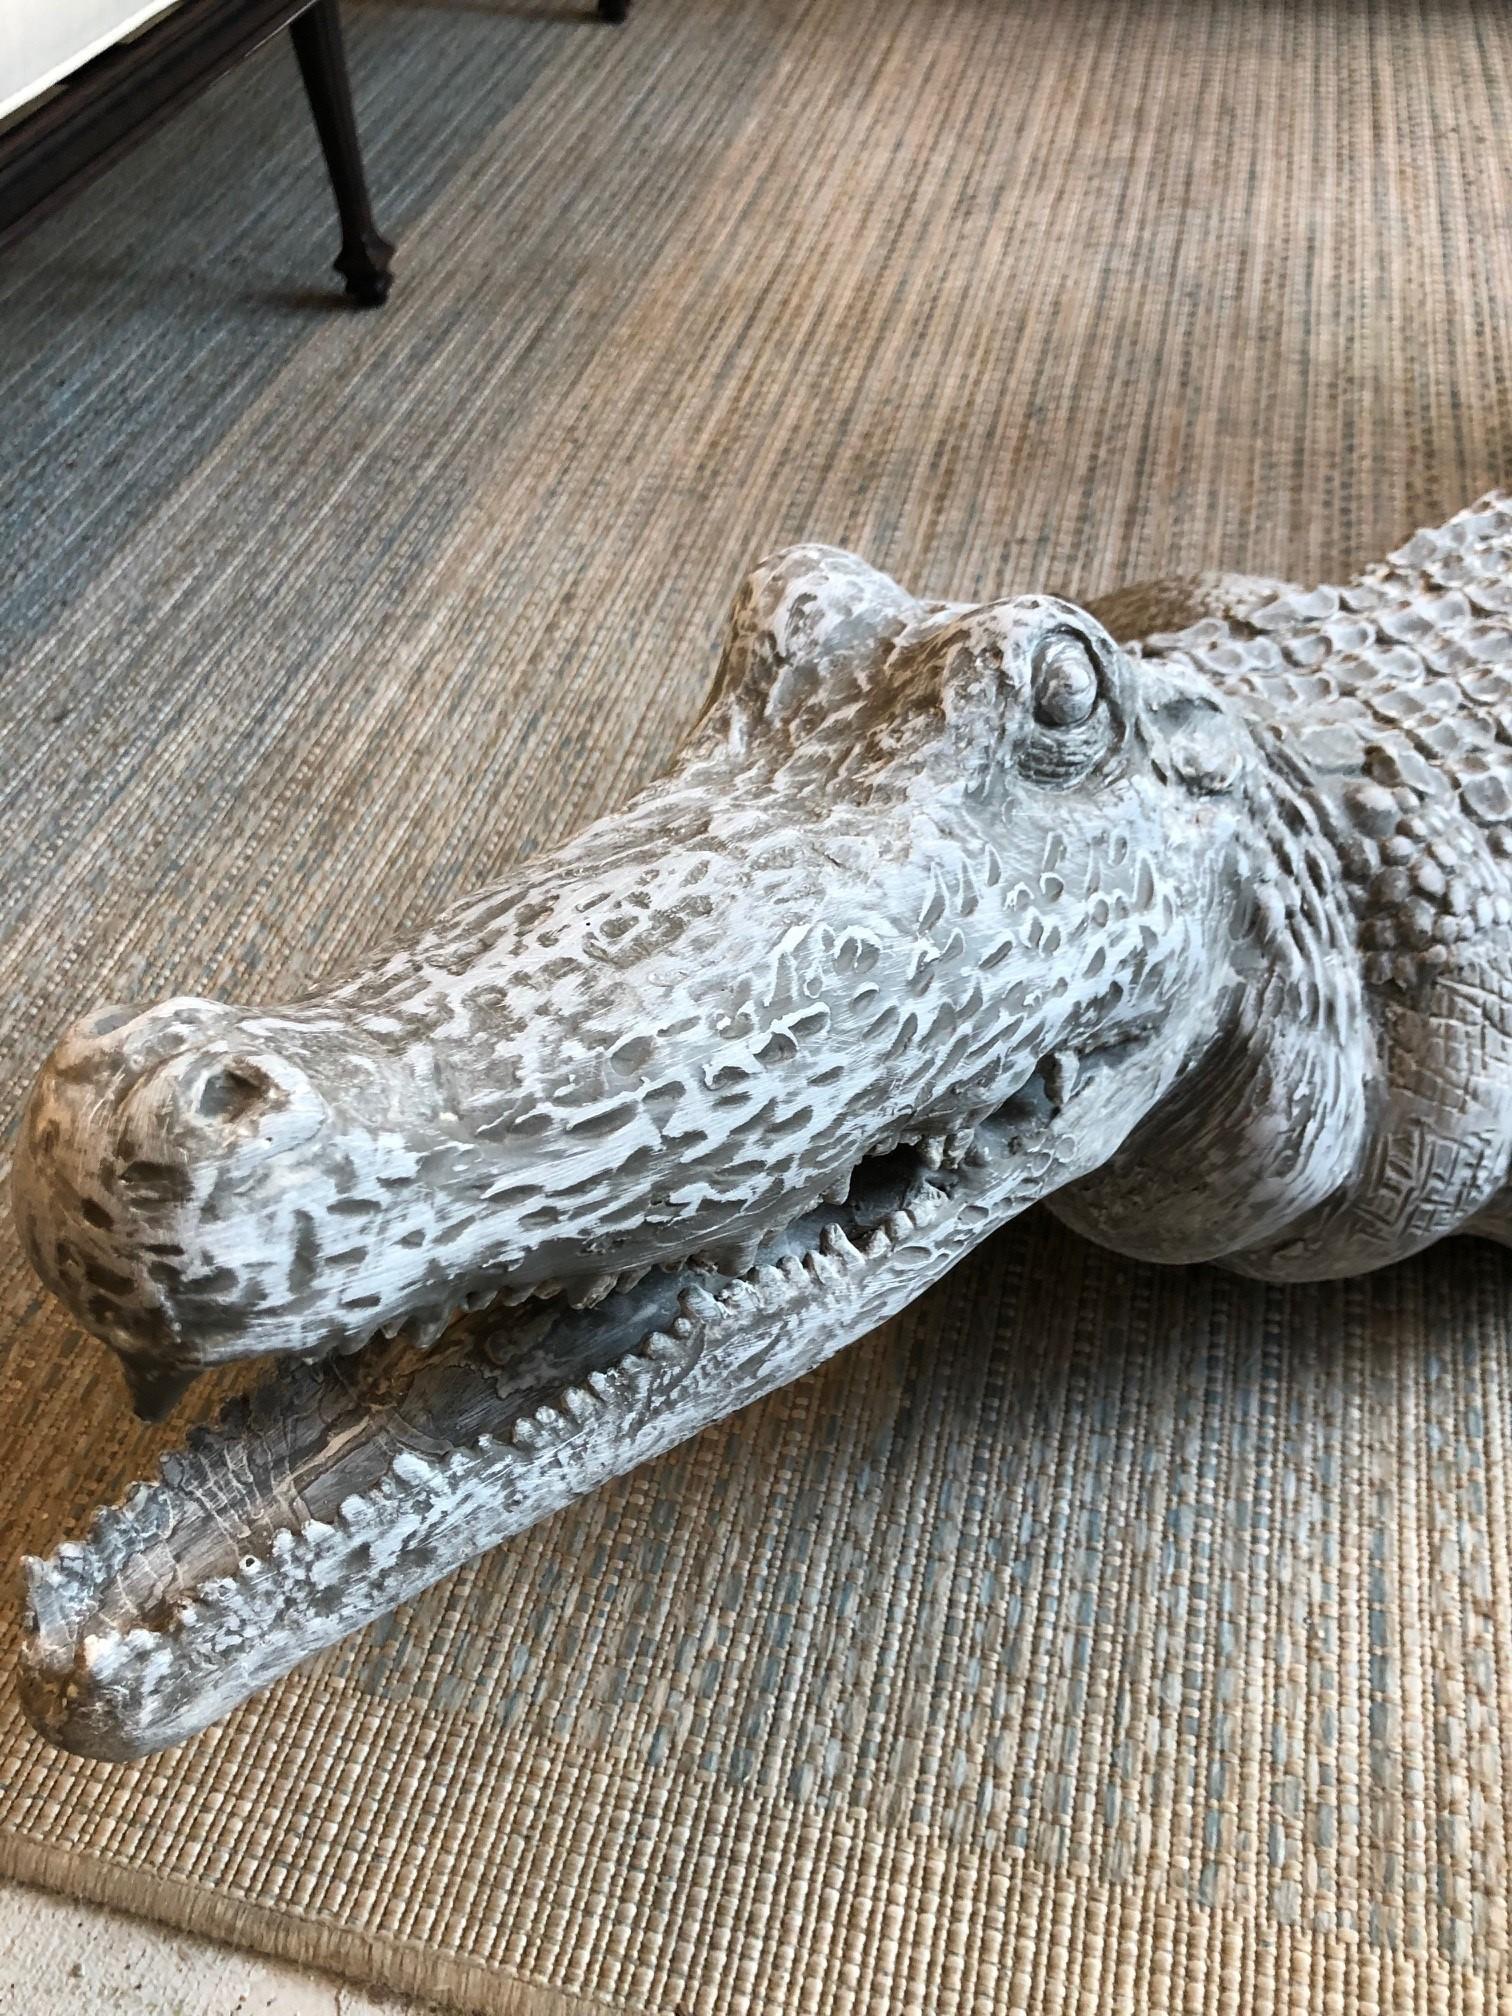 Nord-américain Alligator en fibre de verre  en vente